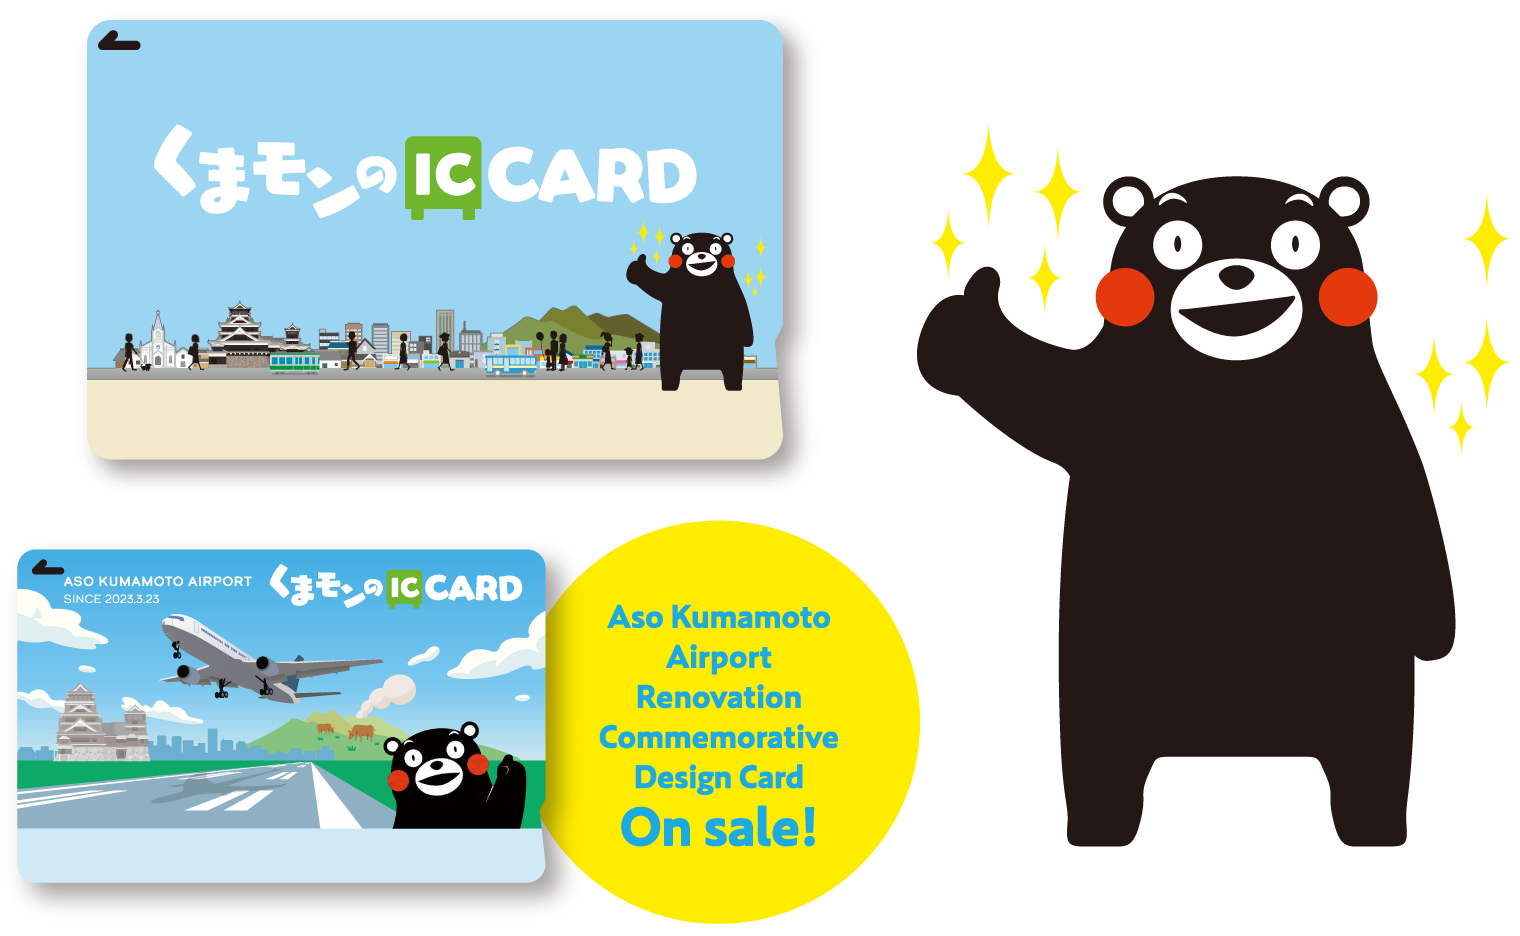 Aso Kumamoto Airport Renovation Commemorative Design Card On sale!